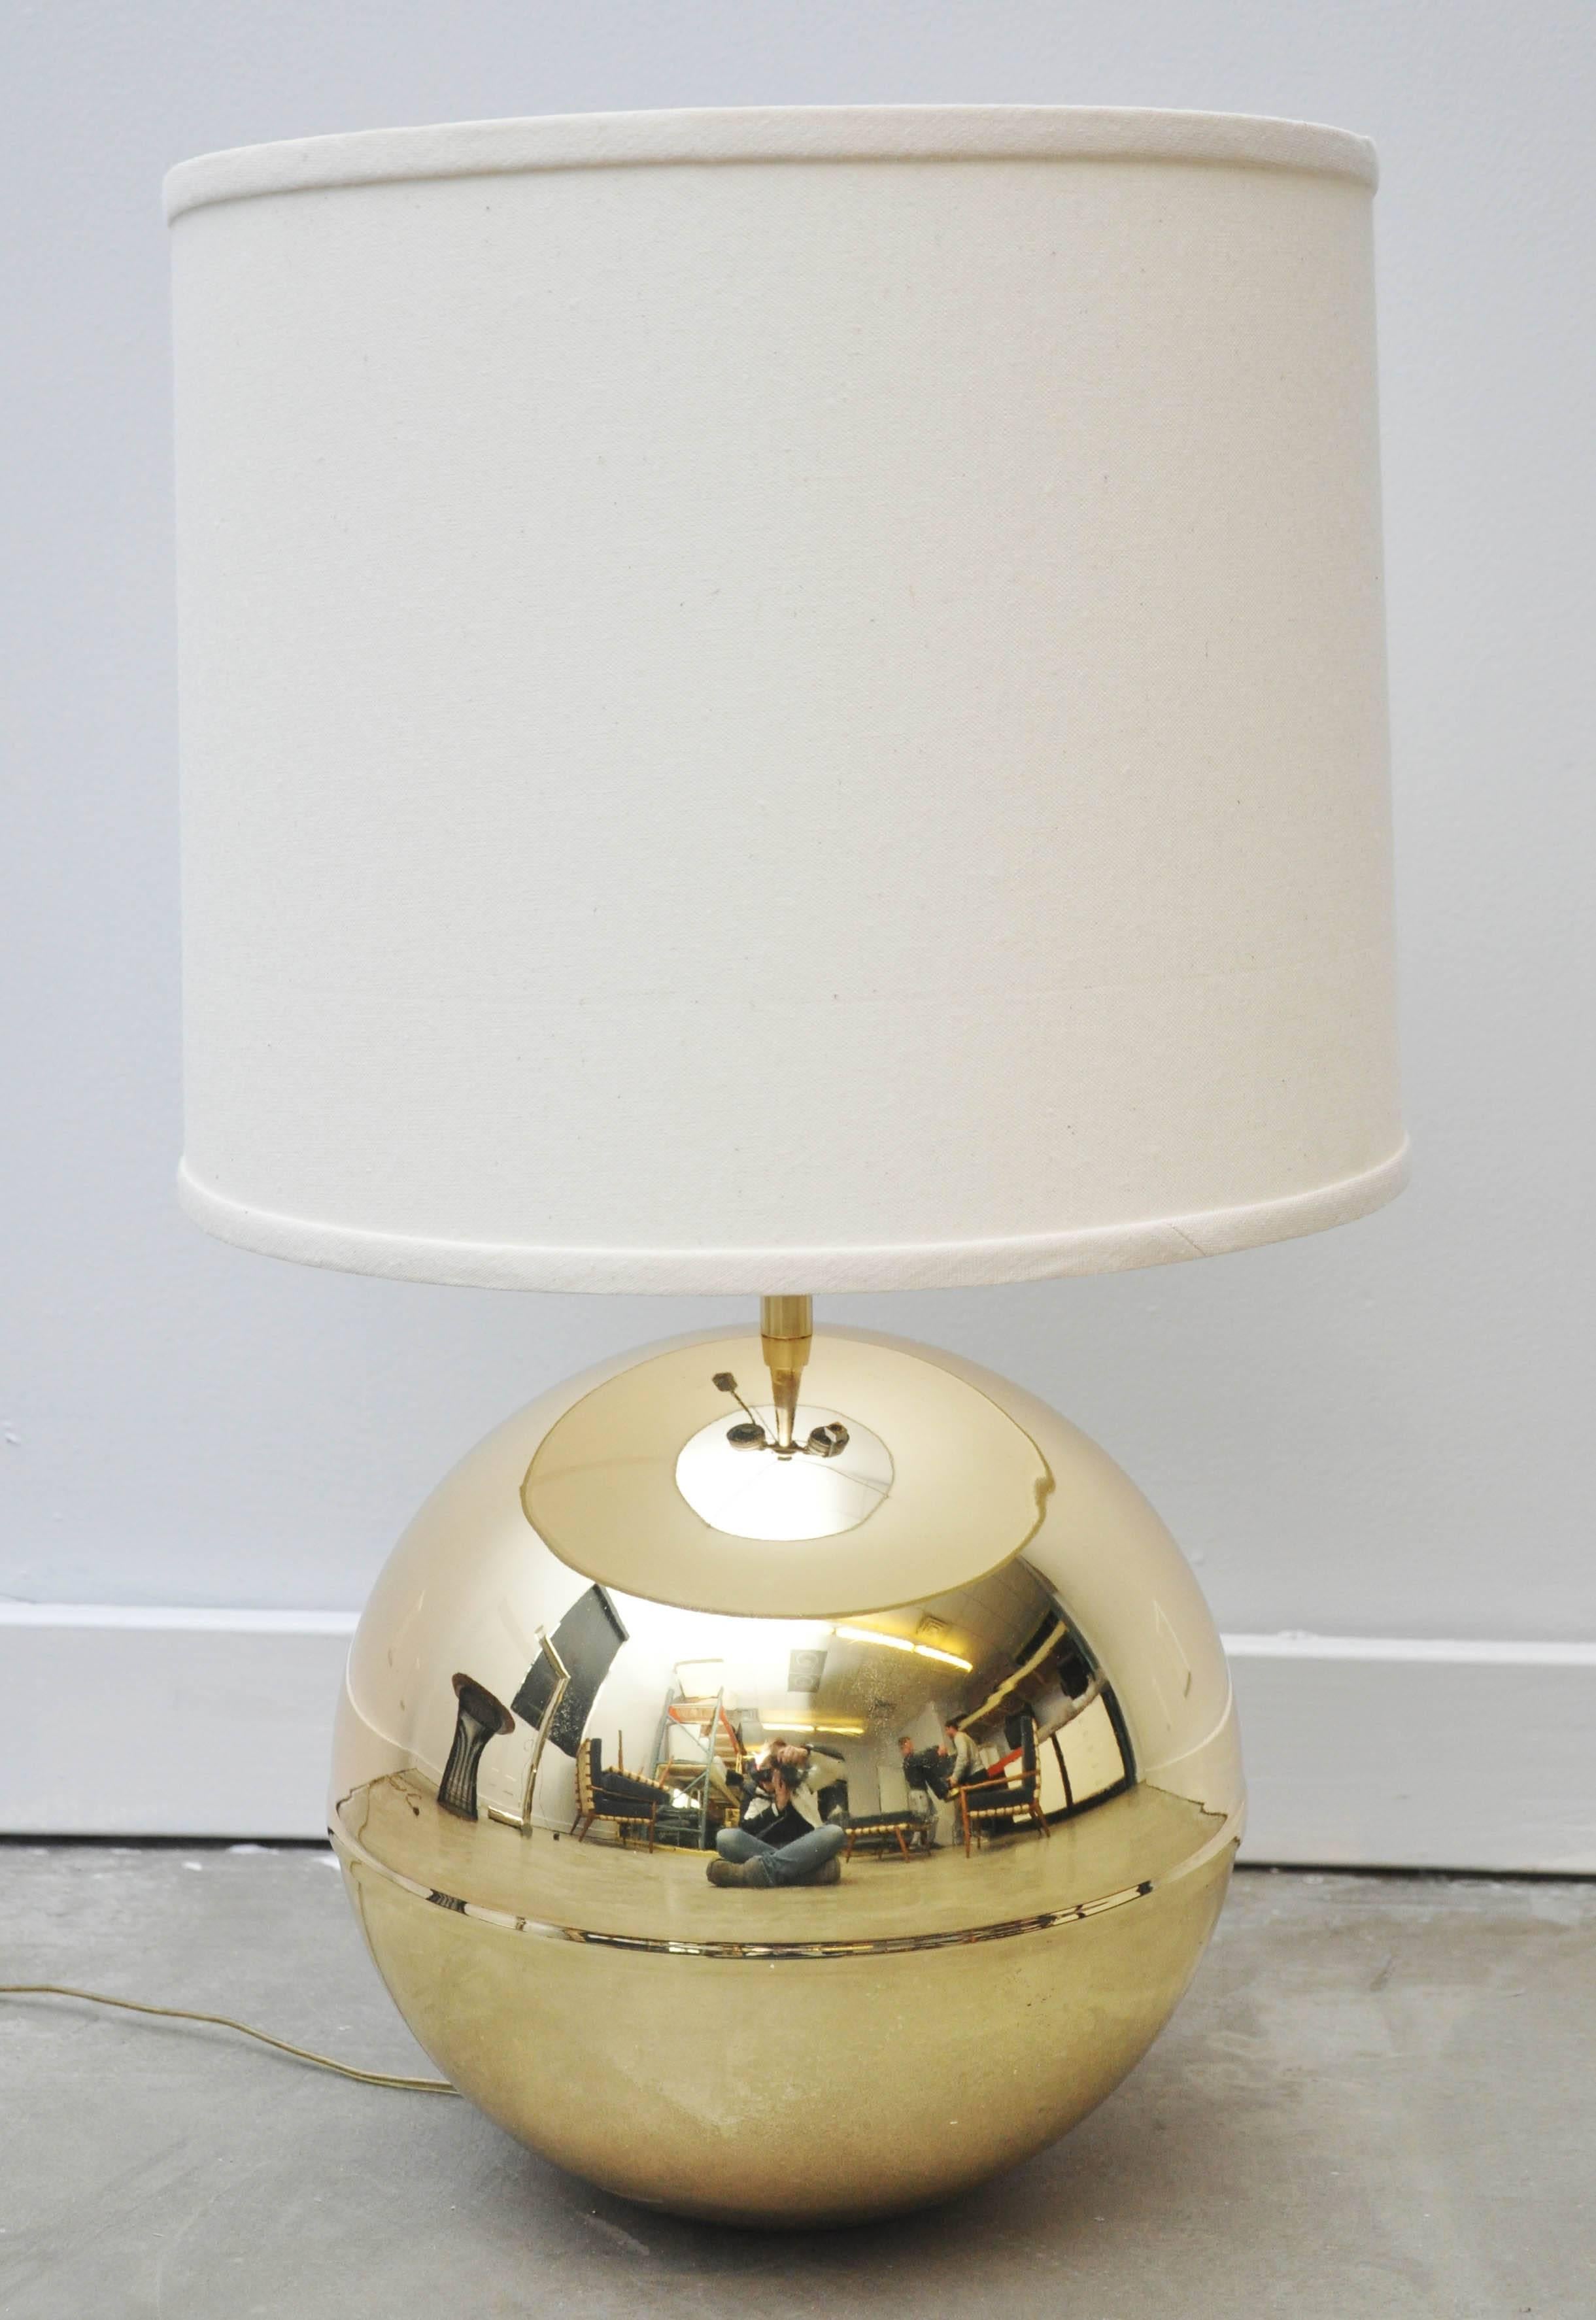 Brass table lamp by Karl Springer.